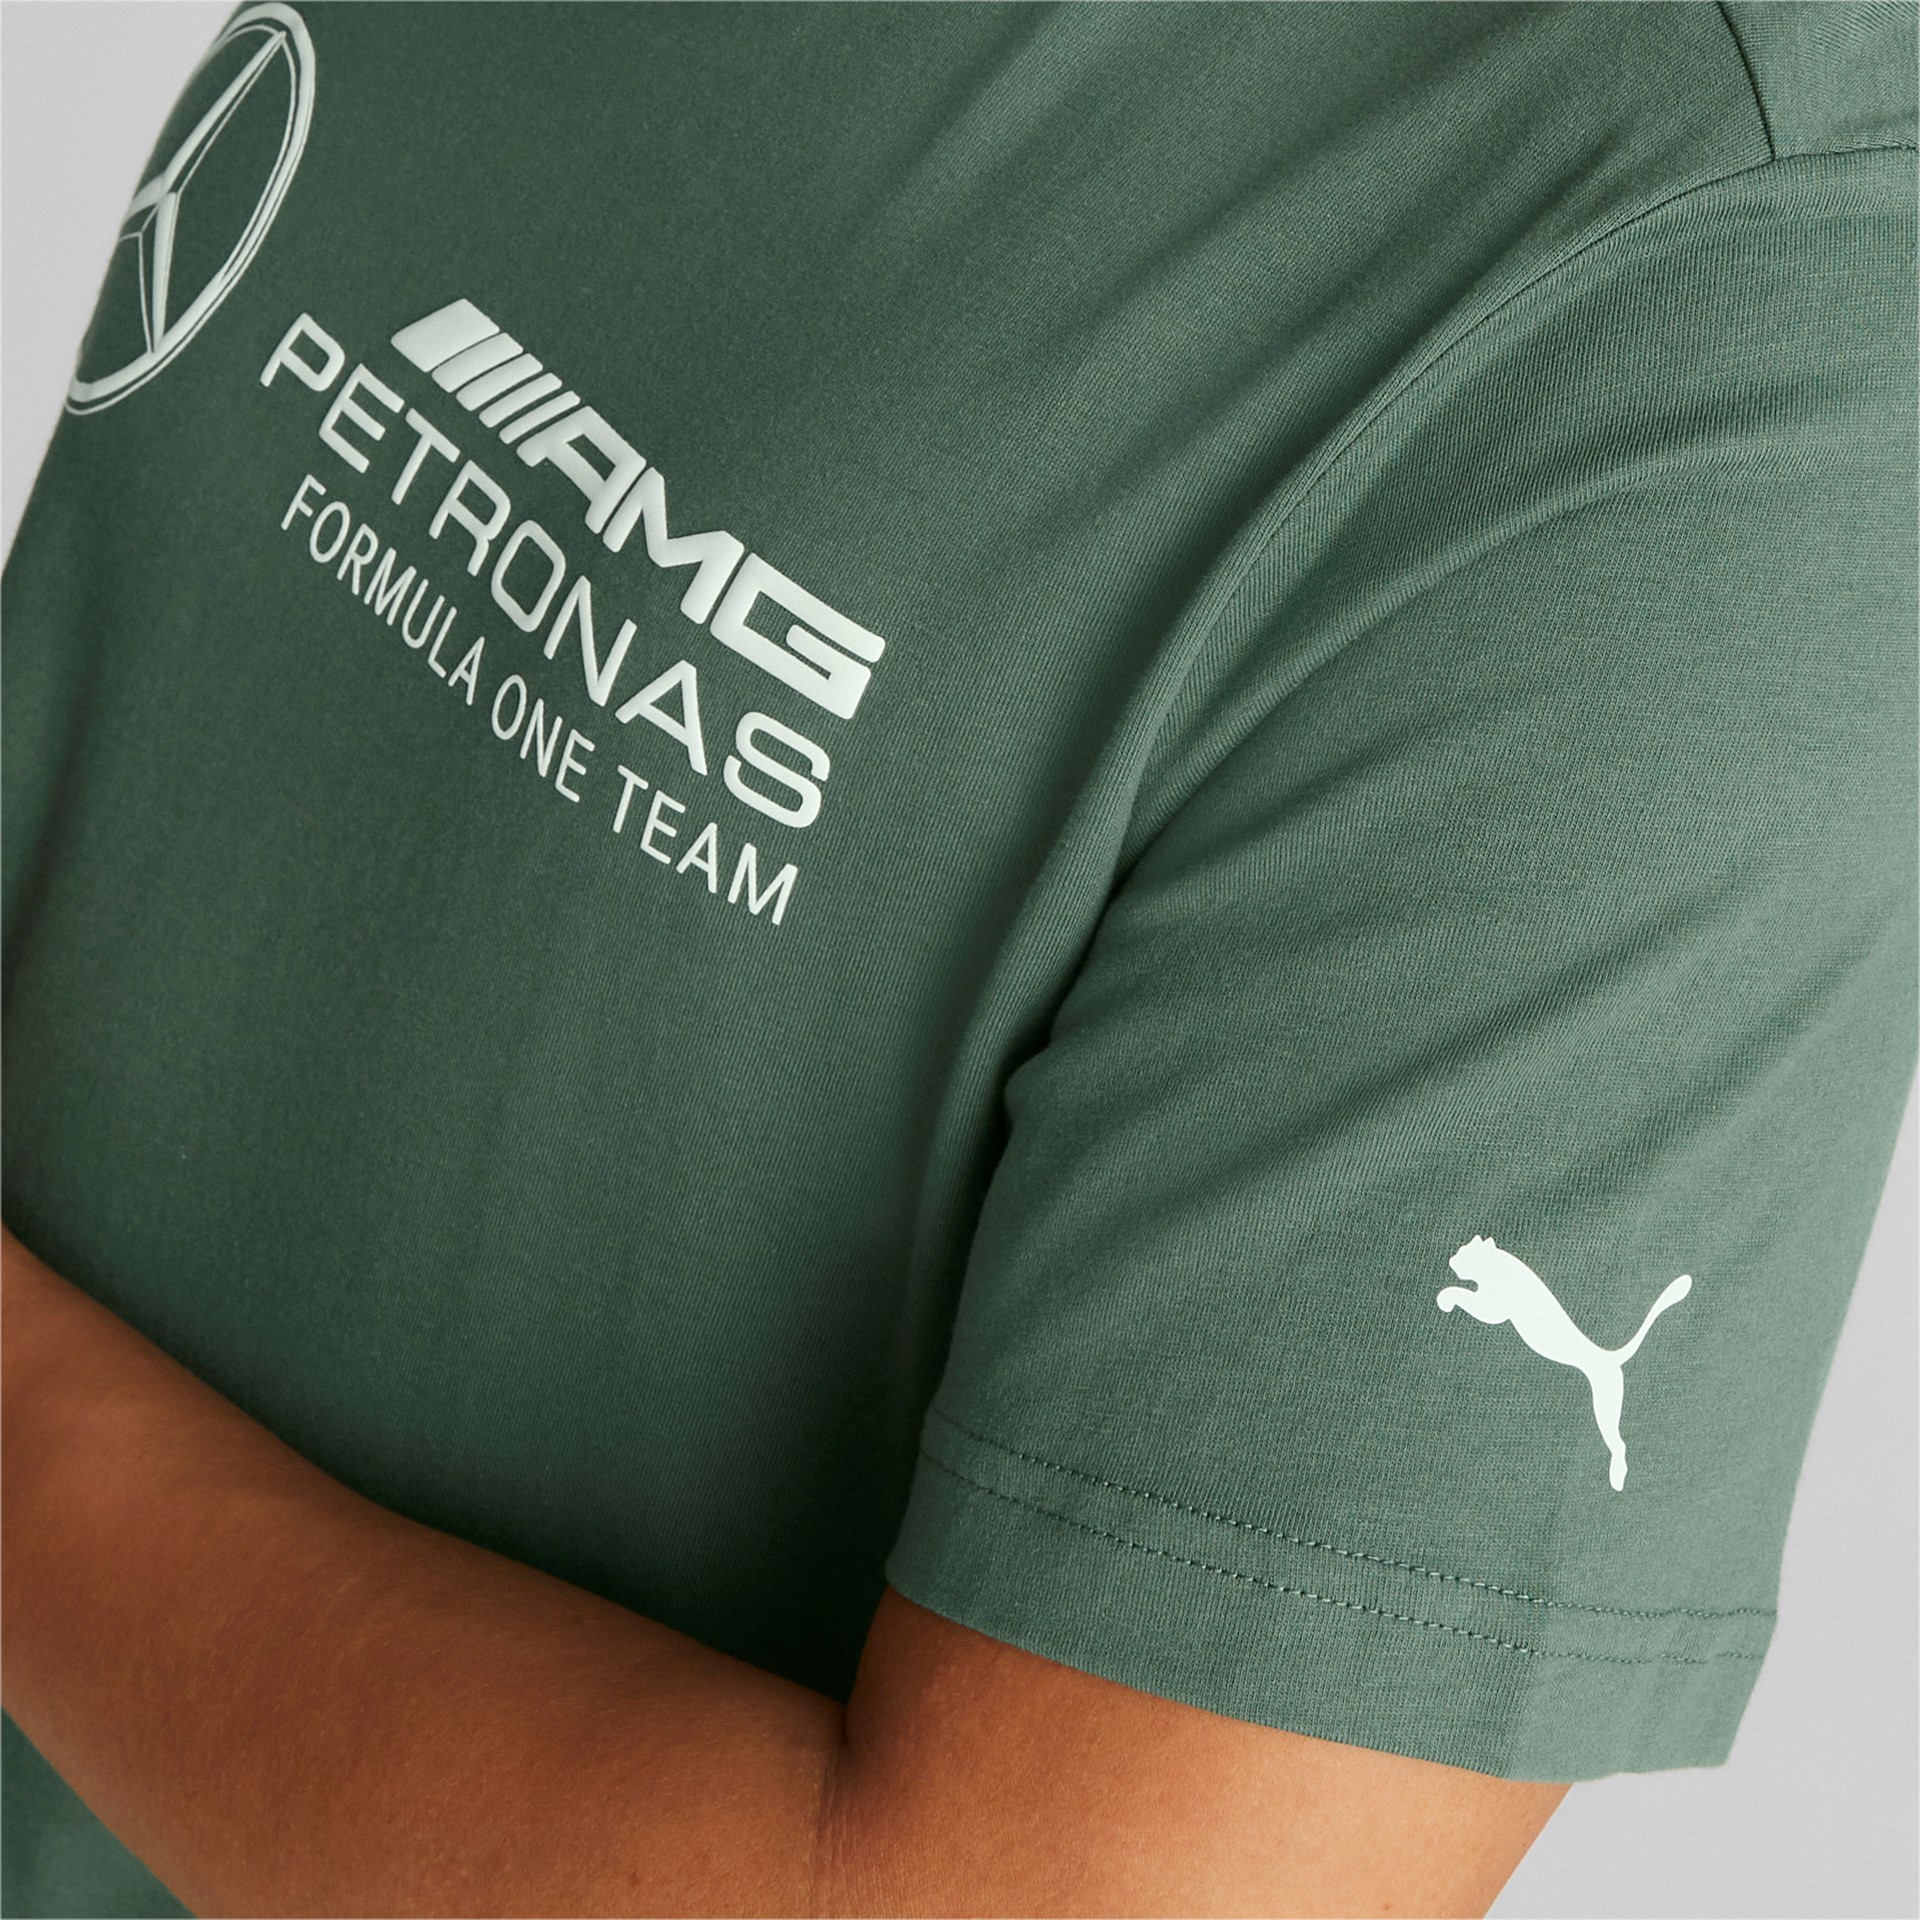 Mercedes-AMG Petronas Motorsport Formel 1-Logo T-Shirt Deep Forest